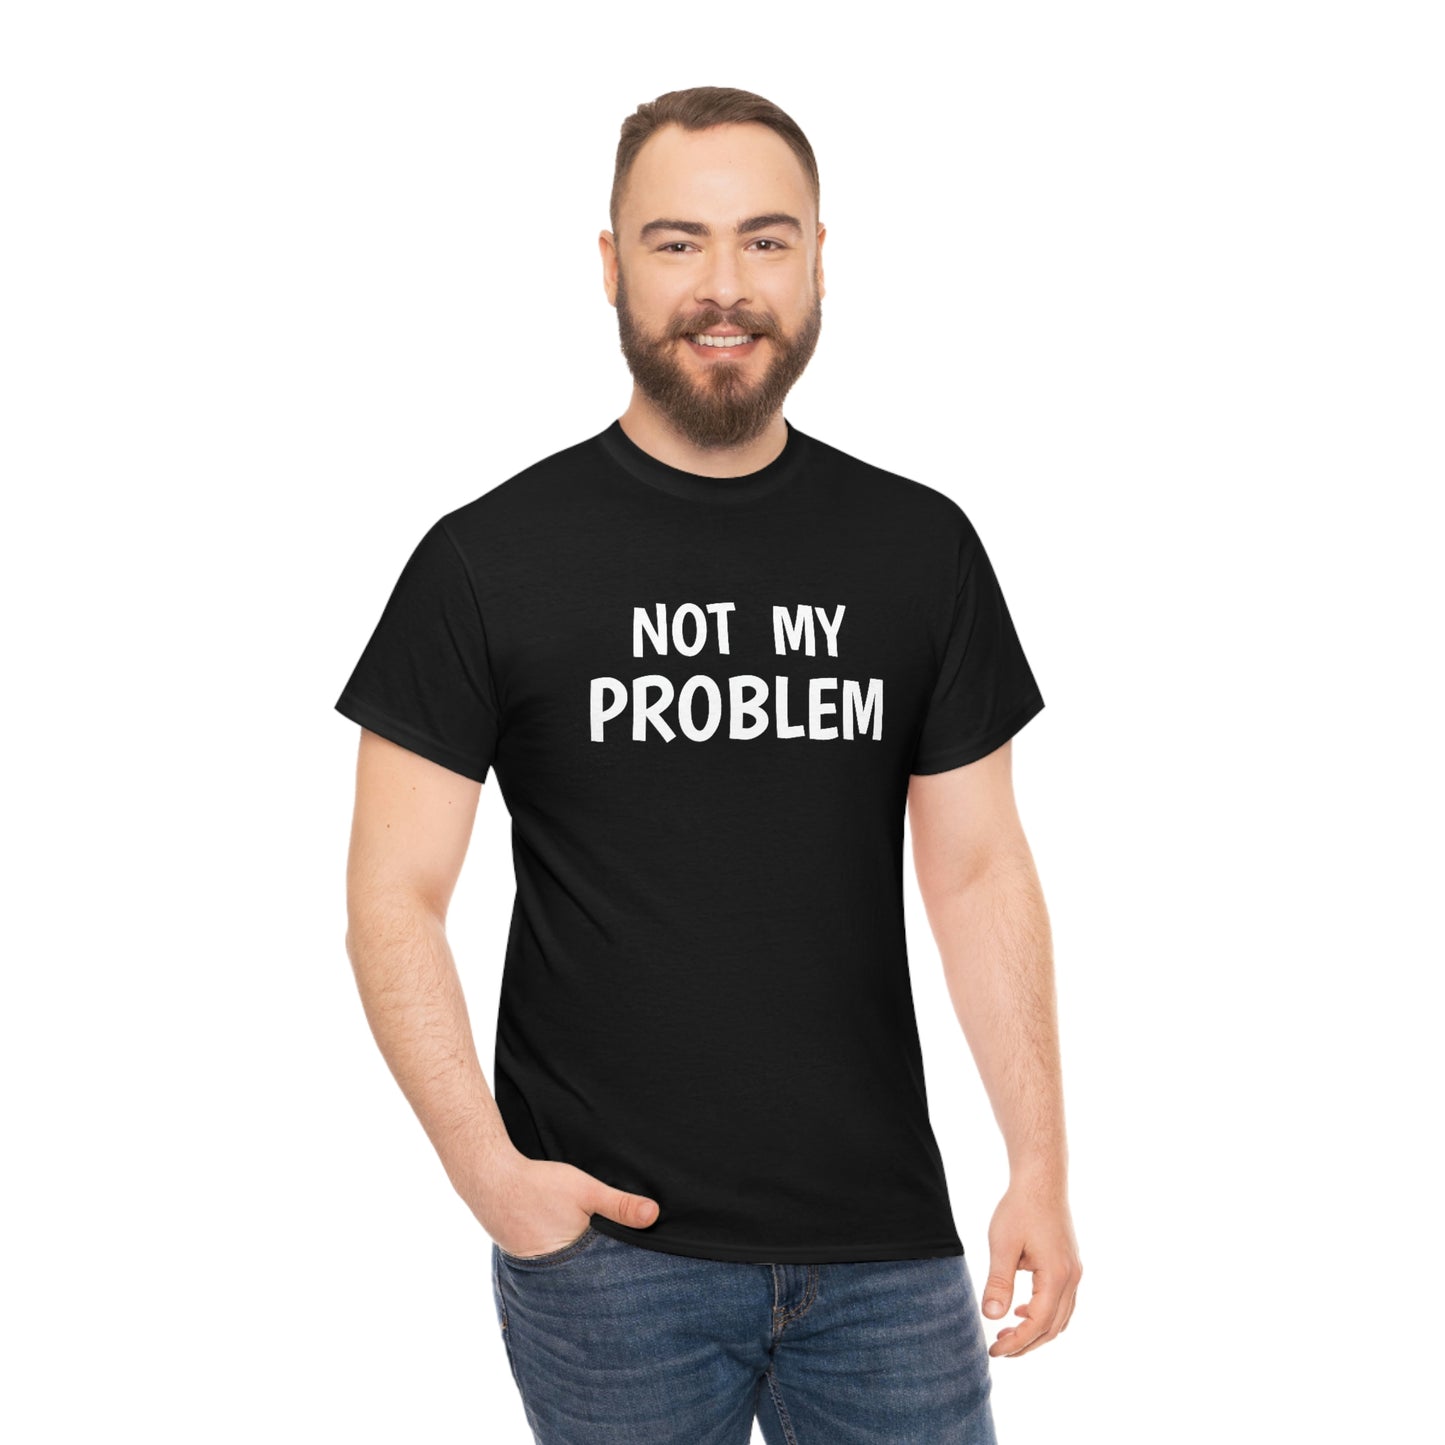 NOT MY PROBLEM T-SHIRT